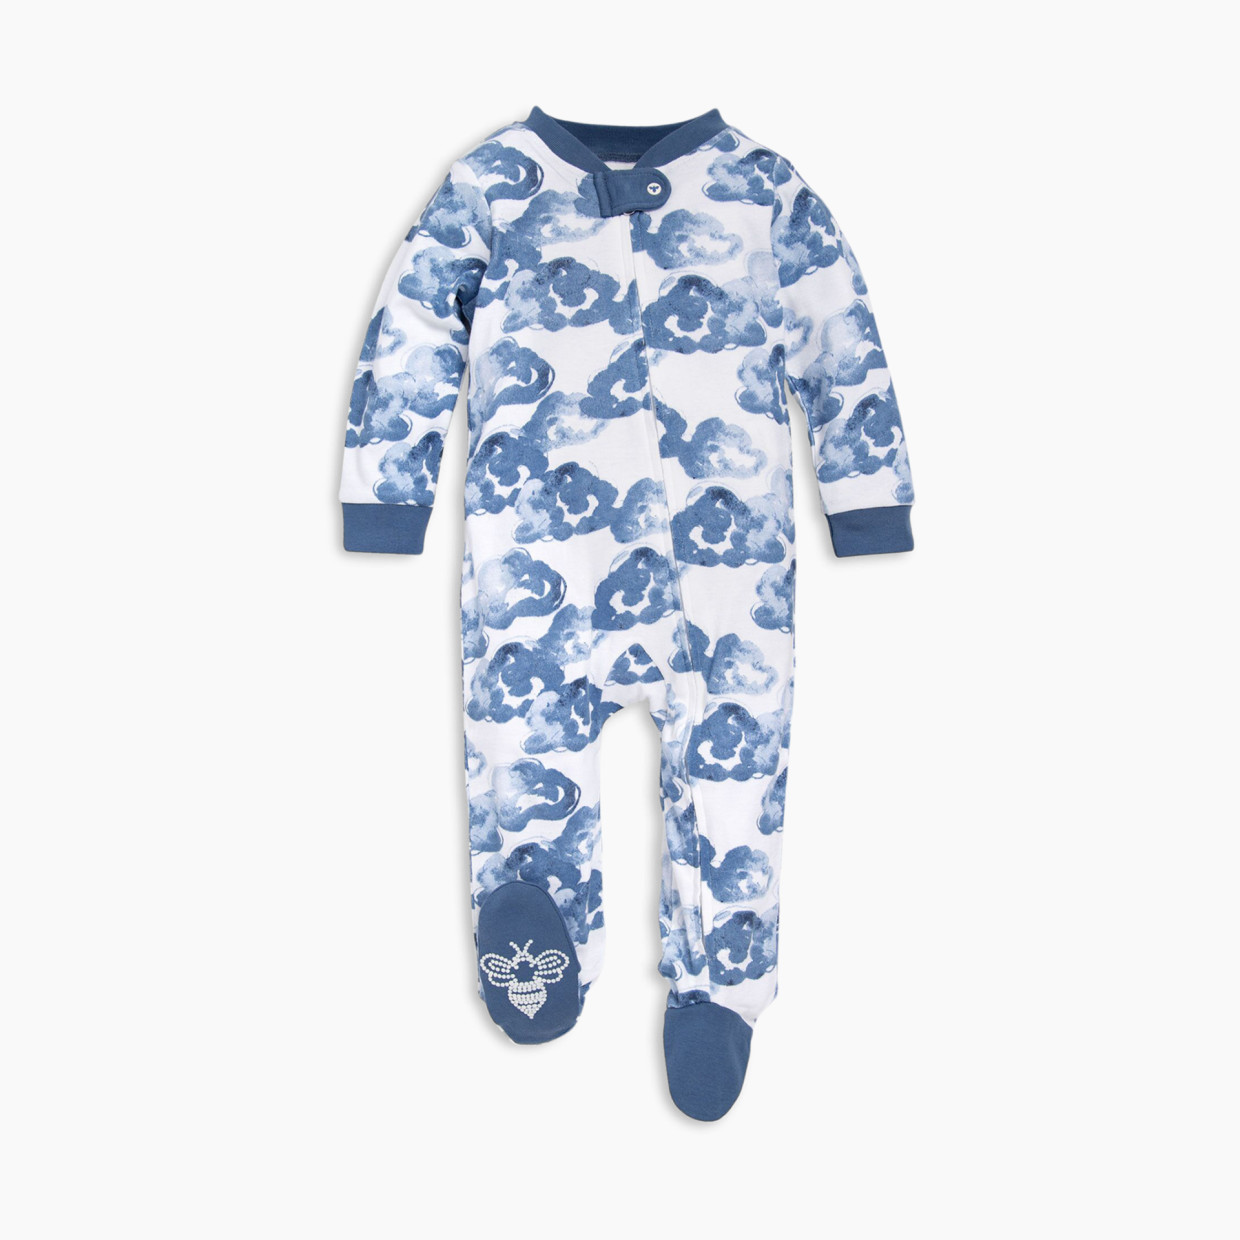 Burt's Bees Baby Organic Sleep & Play Footie Pajamas - Moonlight Clouds, 0-3 Months.